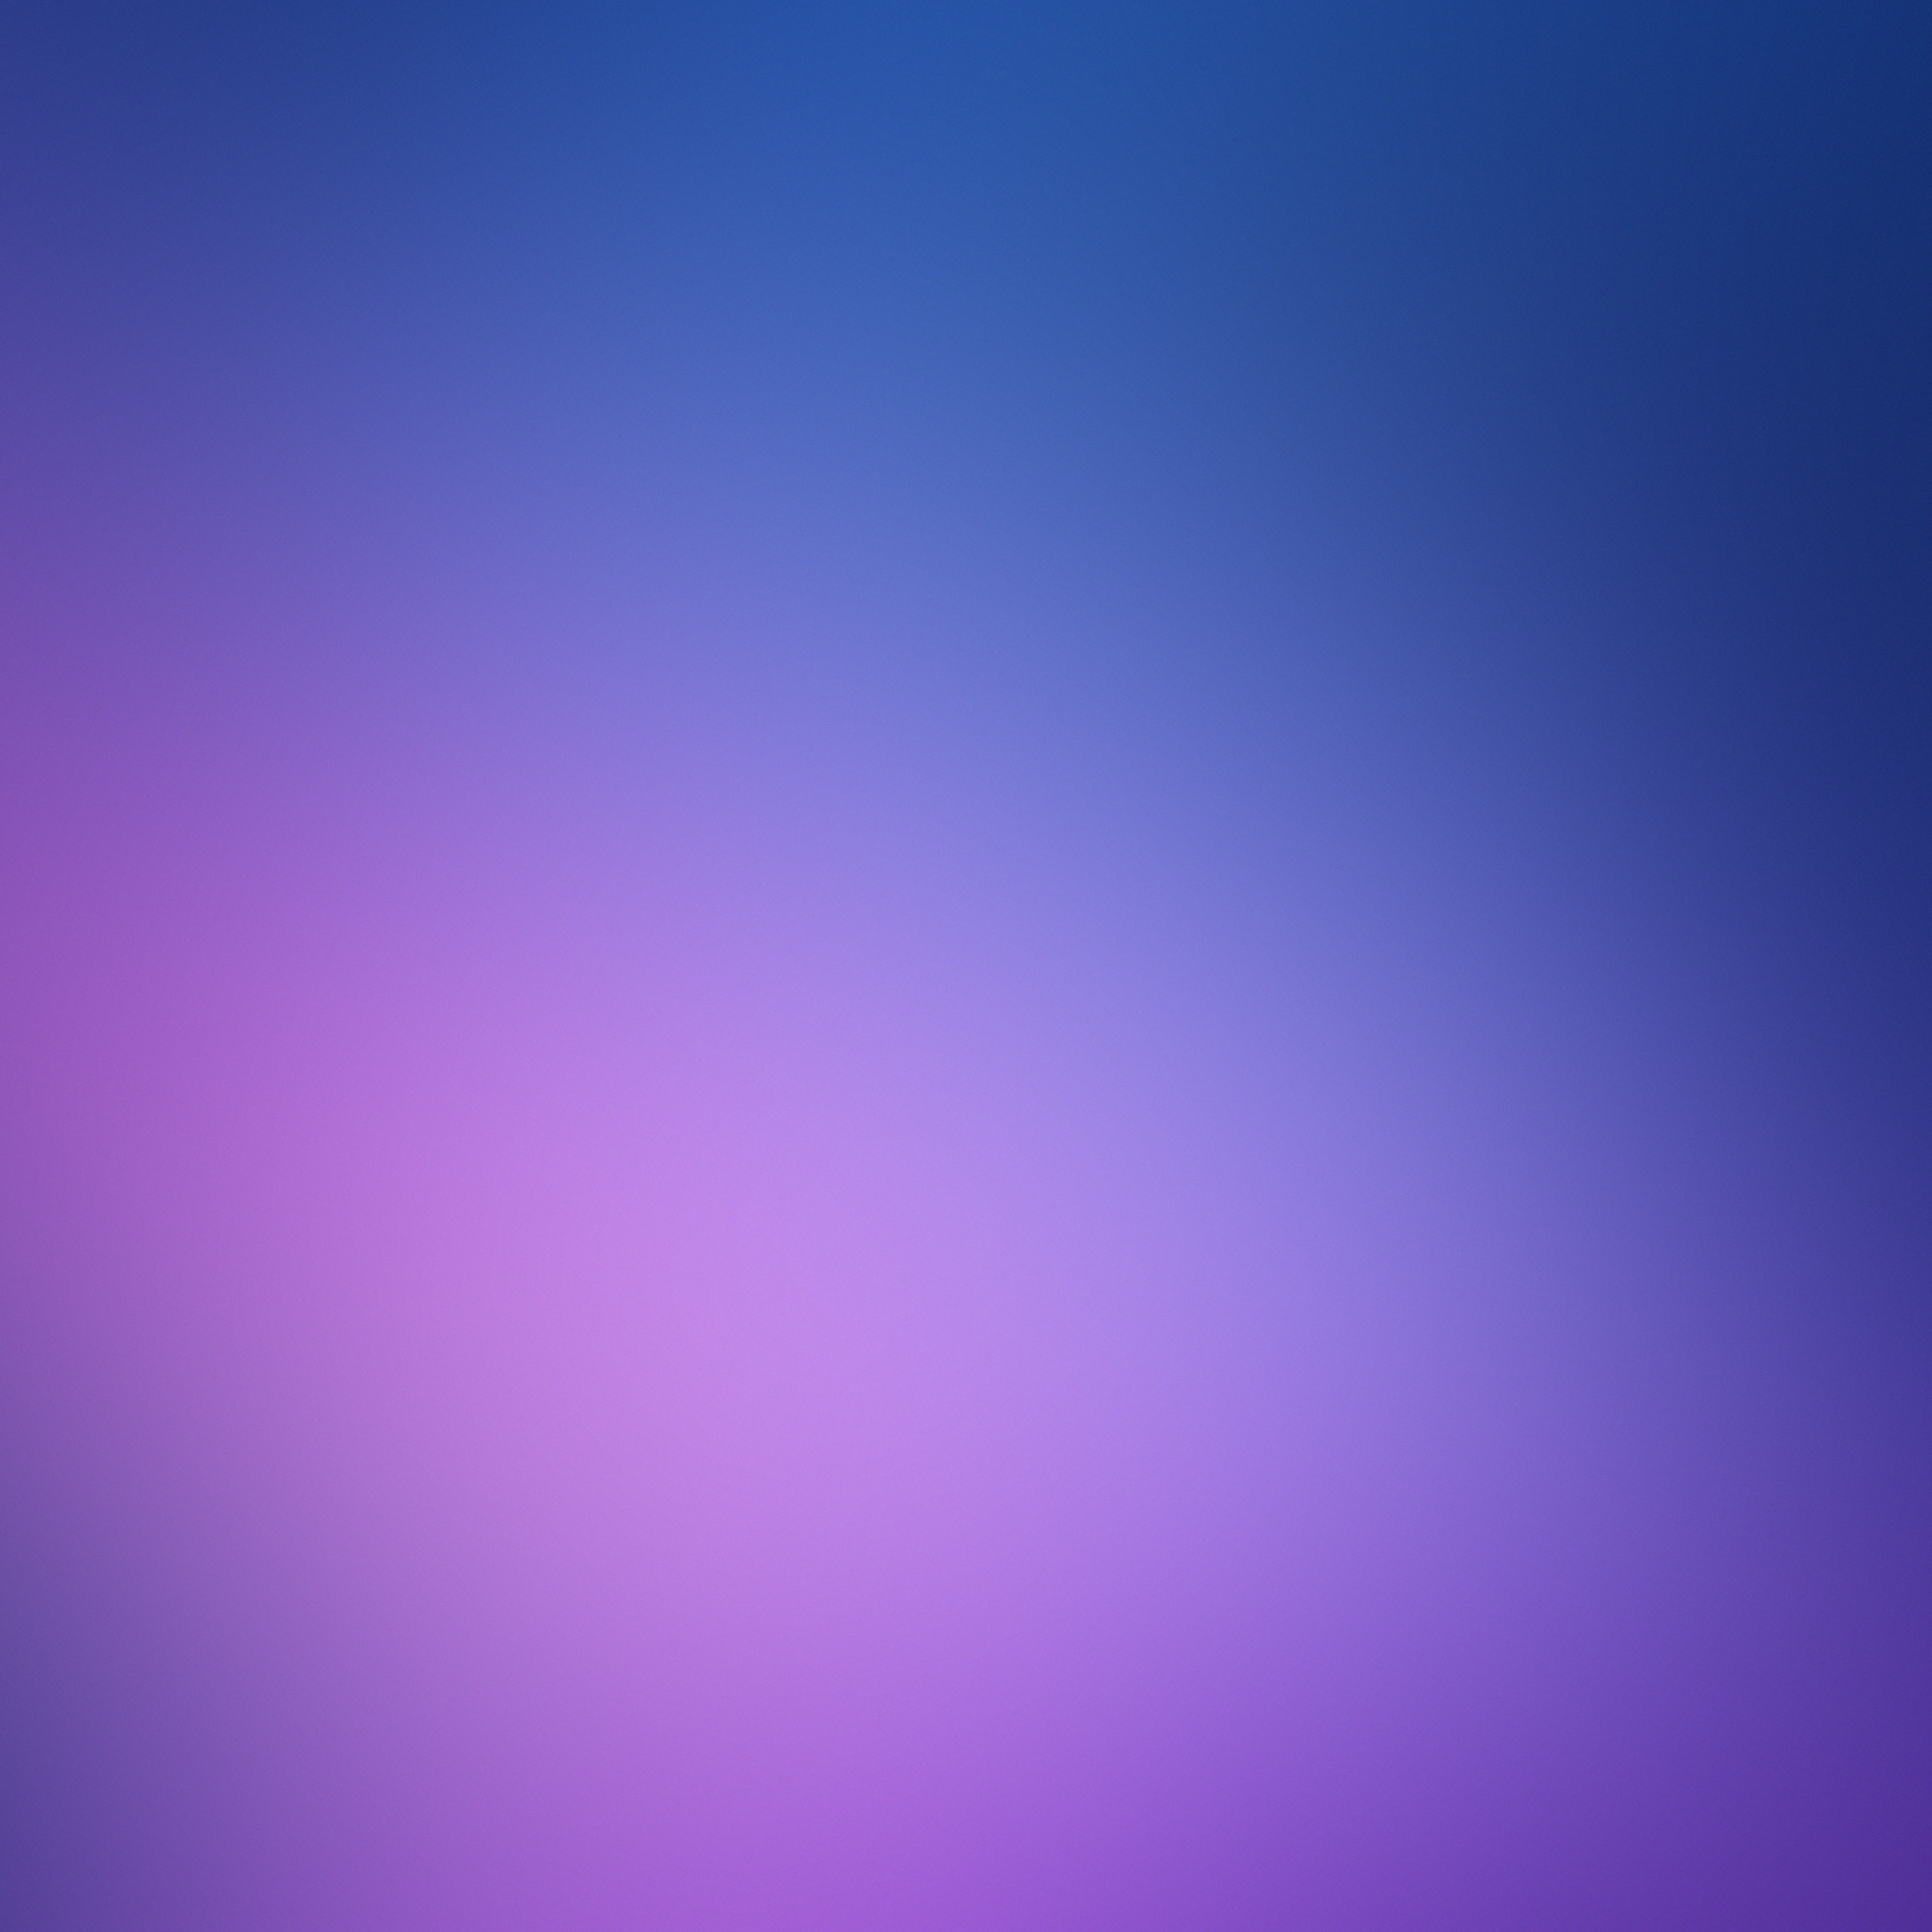 Download wallpaper 2248x2248 gradient, purple blue, abstract, ipad air, ipad  air 2, ipad 3, ipad 4, ipad mini 2, ipad mini 3, 2248x2248 hd background,  14955